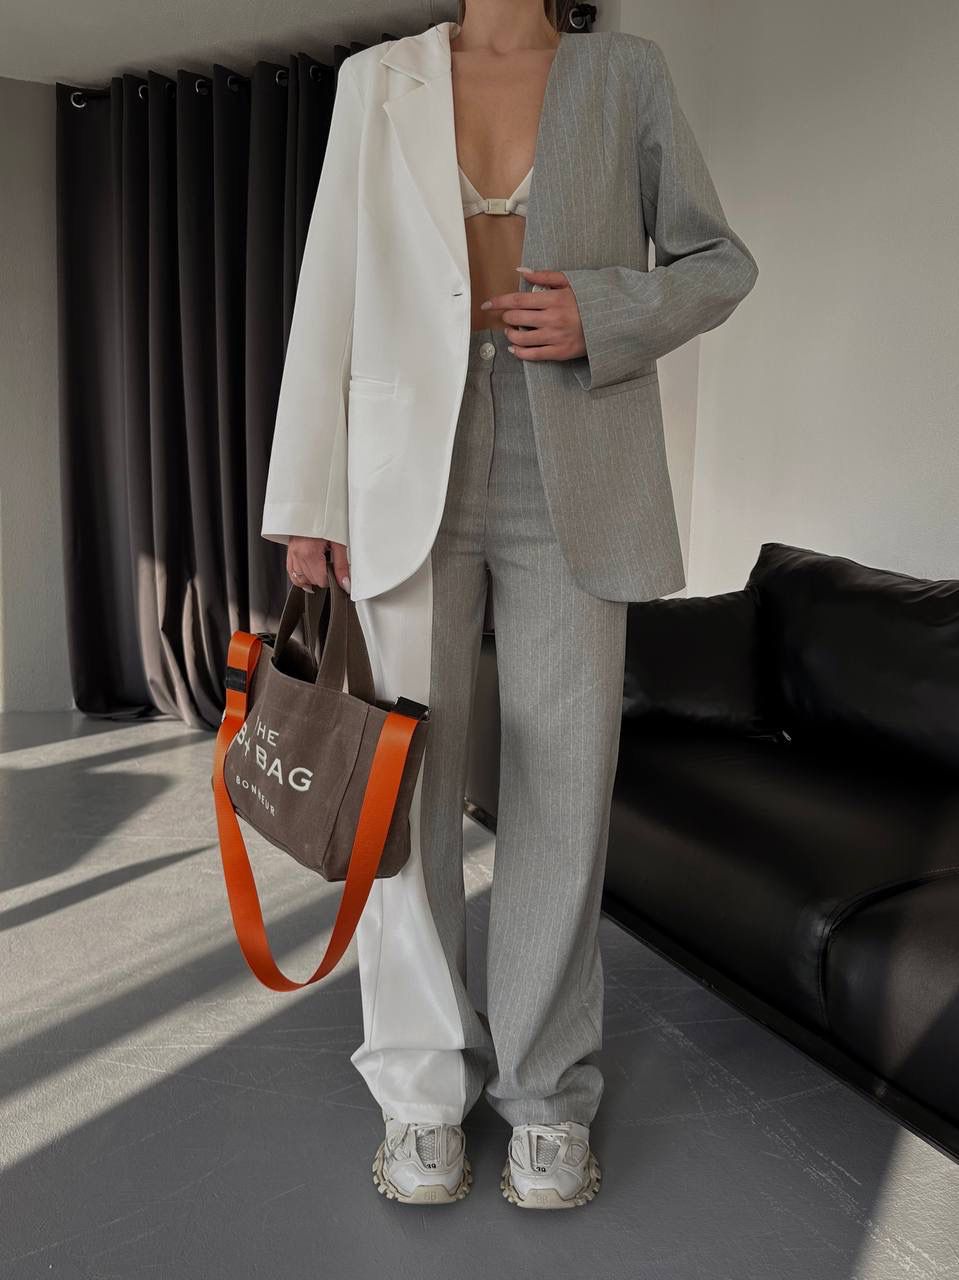 6x Colour Anzug Set Grey & White